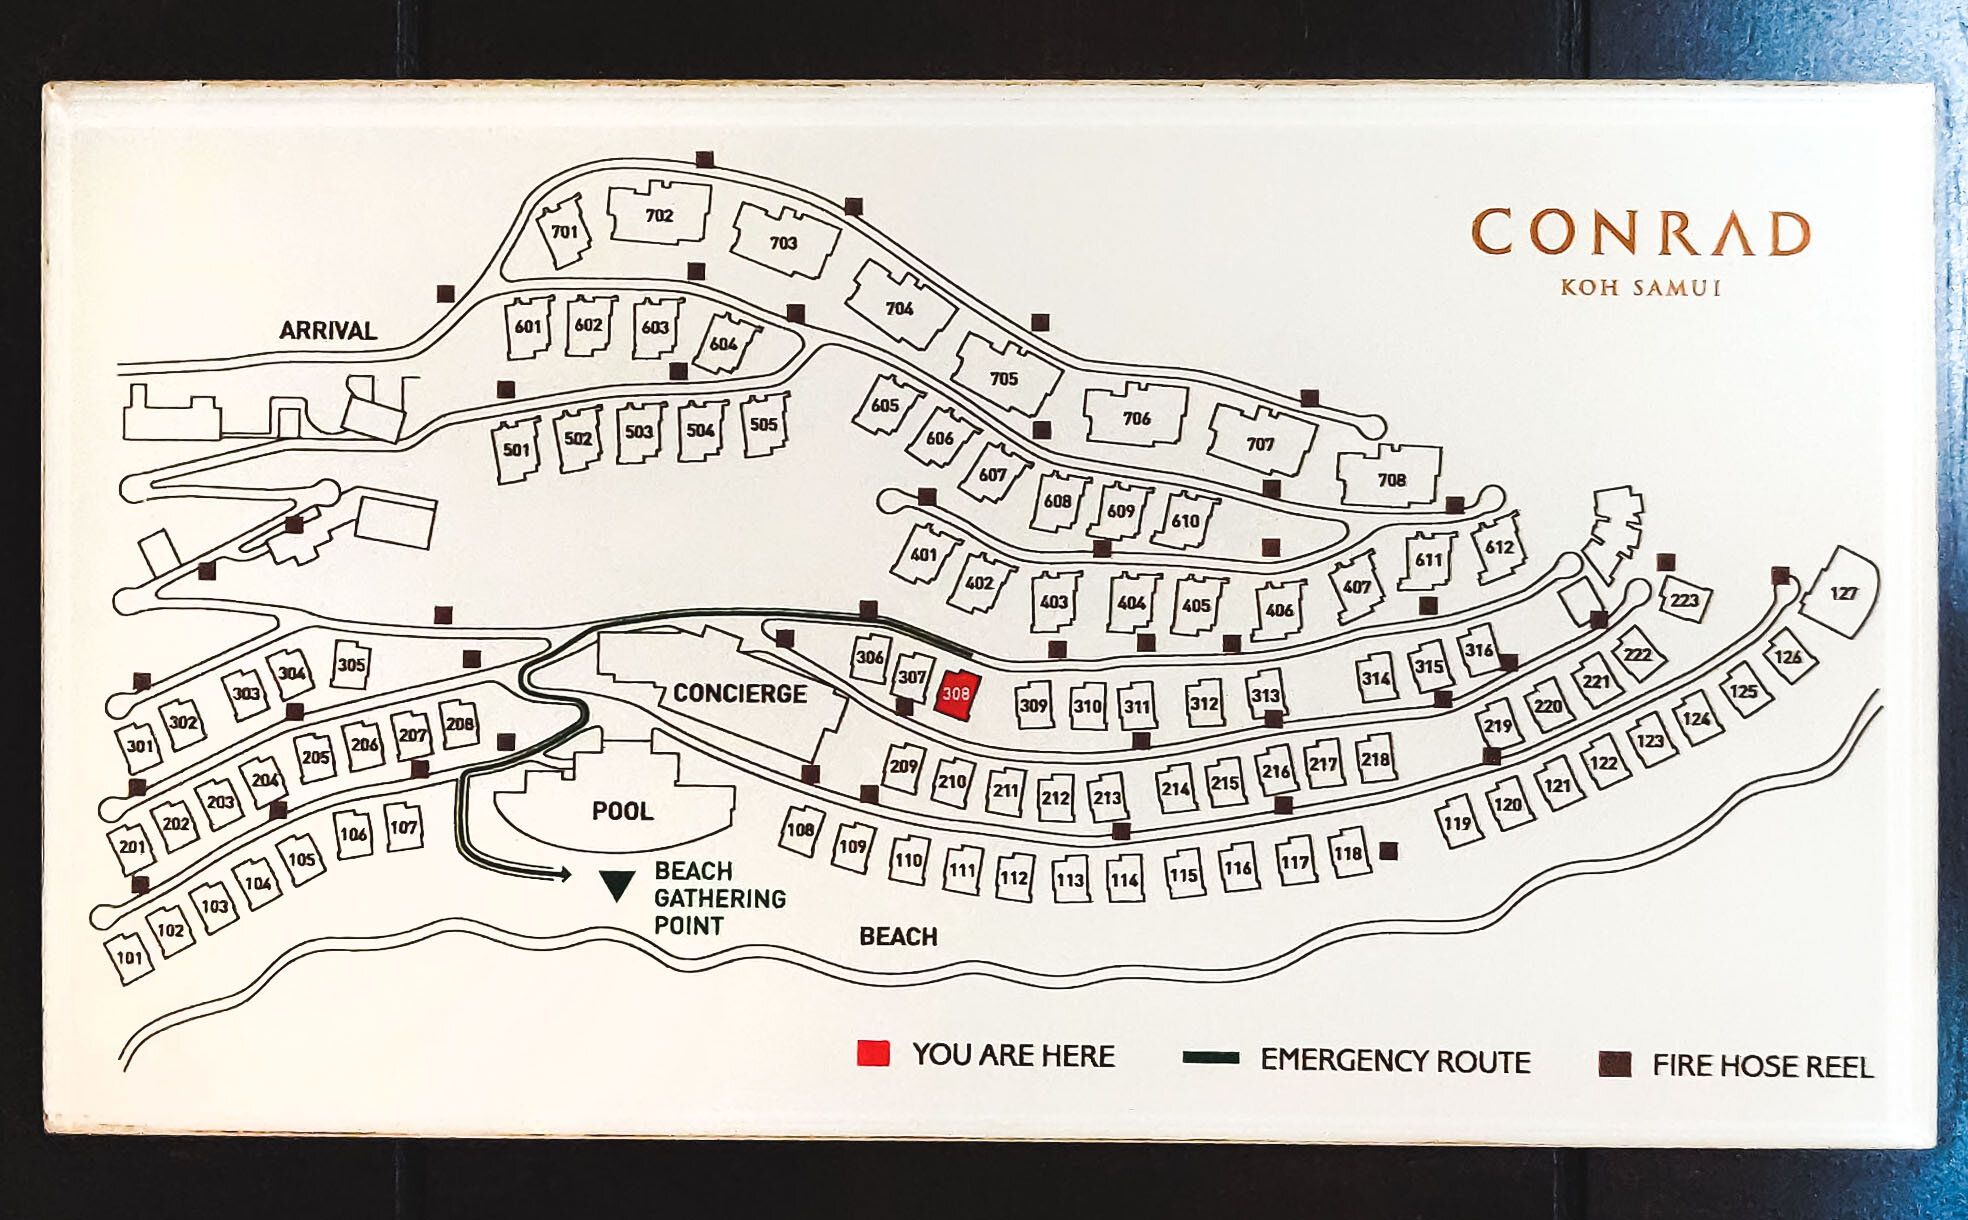 Map of Conrad Koh Samui with villa numbers